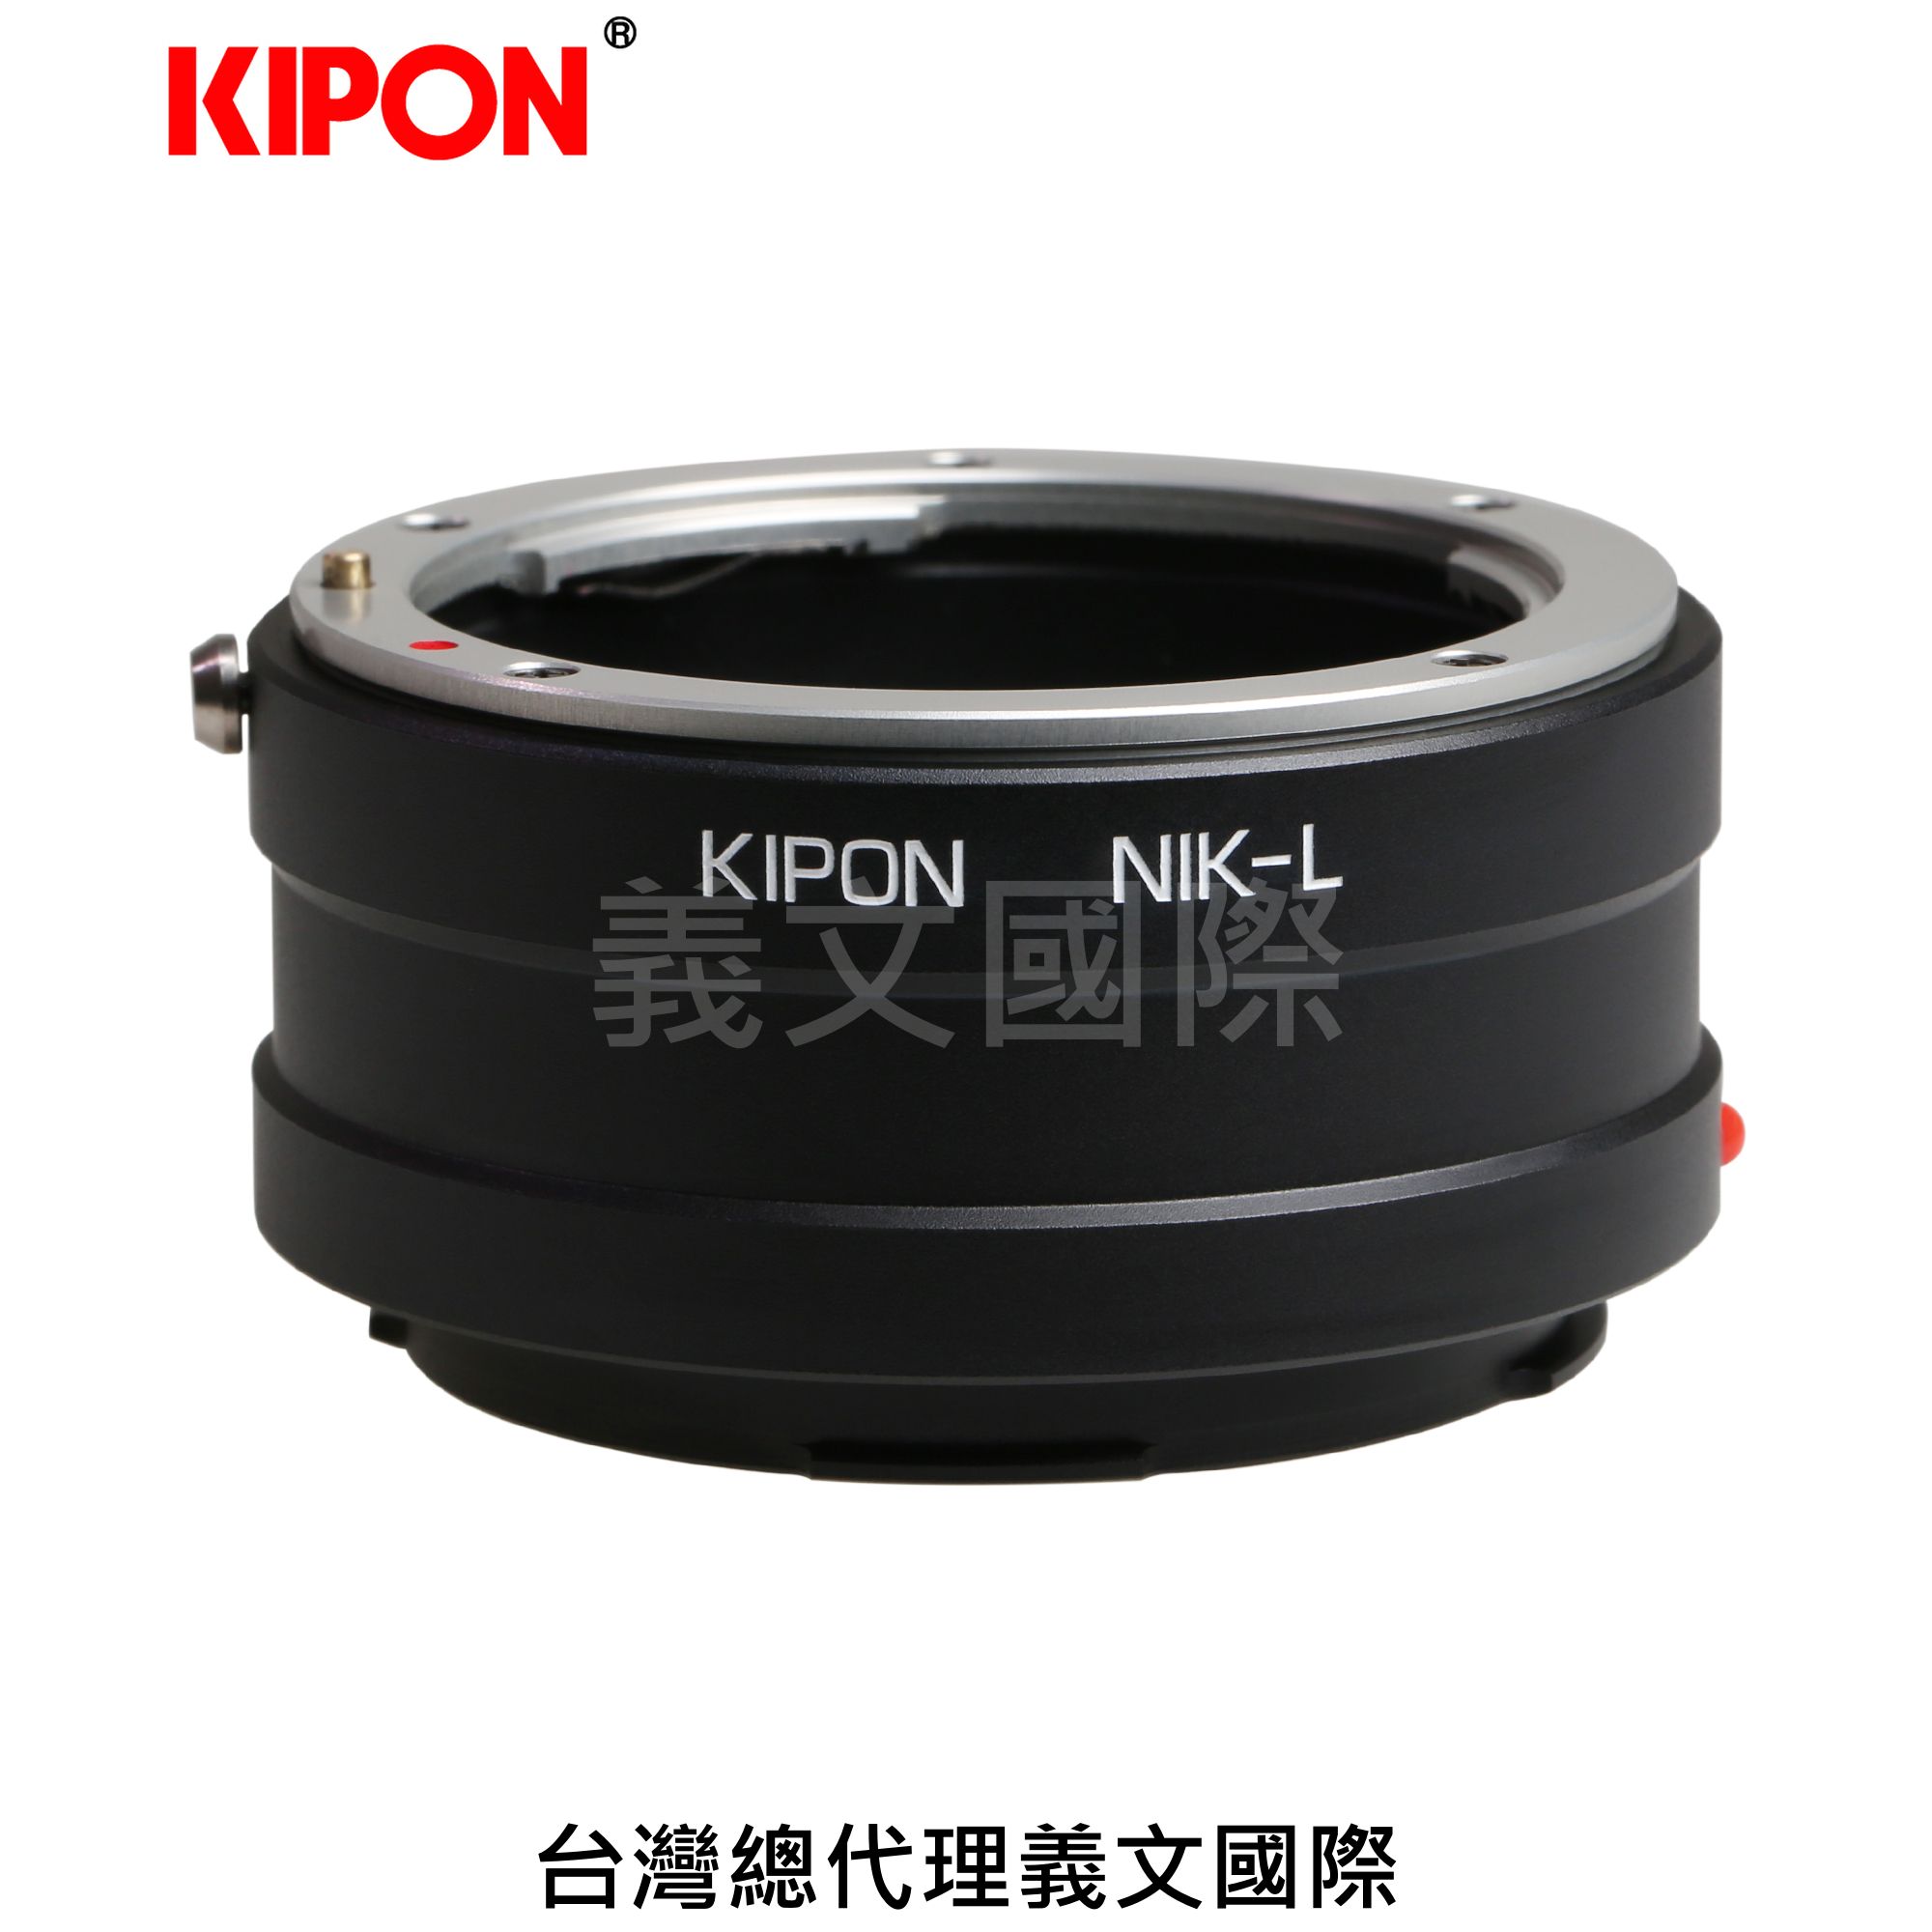 Kipon轉接環專賣店:NIKON-L(Leica SL,徠卡,尼康,N/F,NF,S1,S1R,S1H,TL,TL2,SIGMA FP)